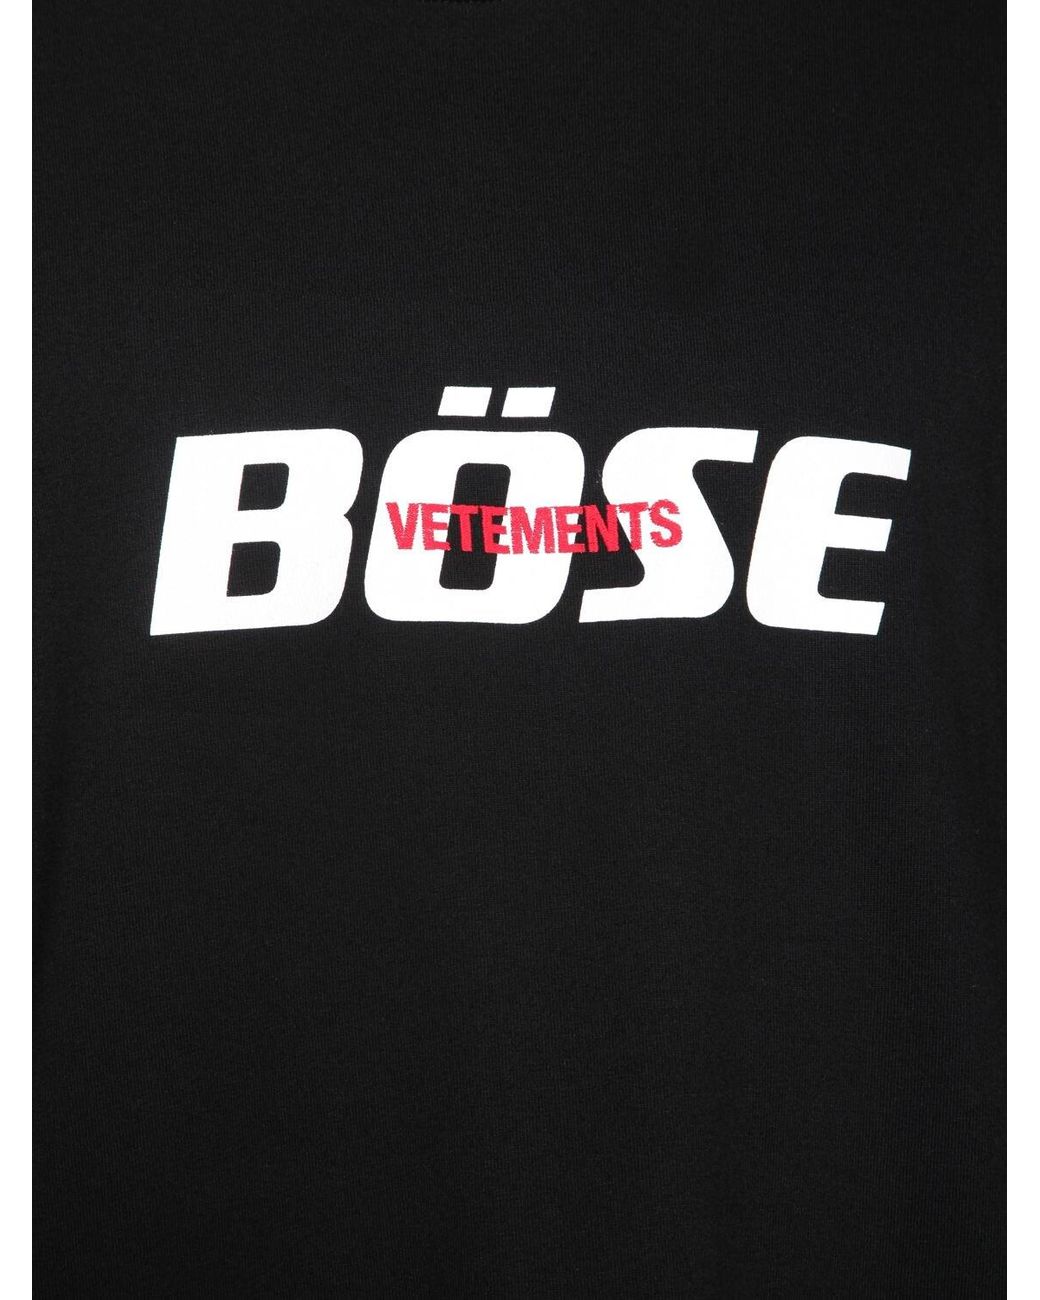 Vetements Oversize "bose" Print Cotton T-shirt in Black for Men | Lyst